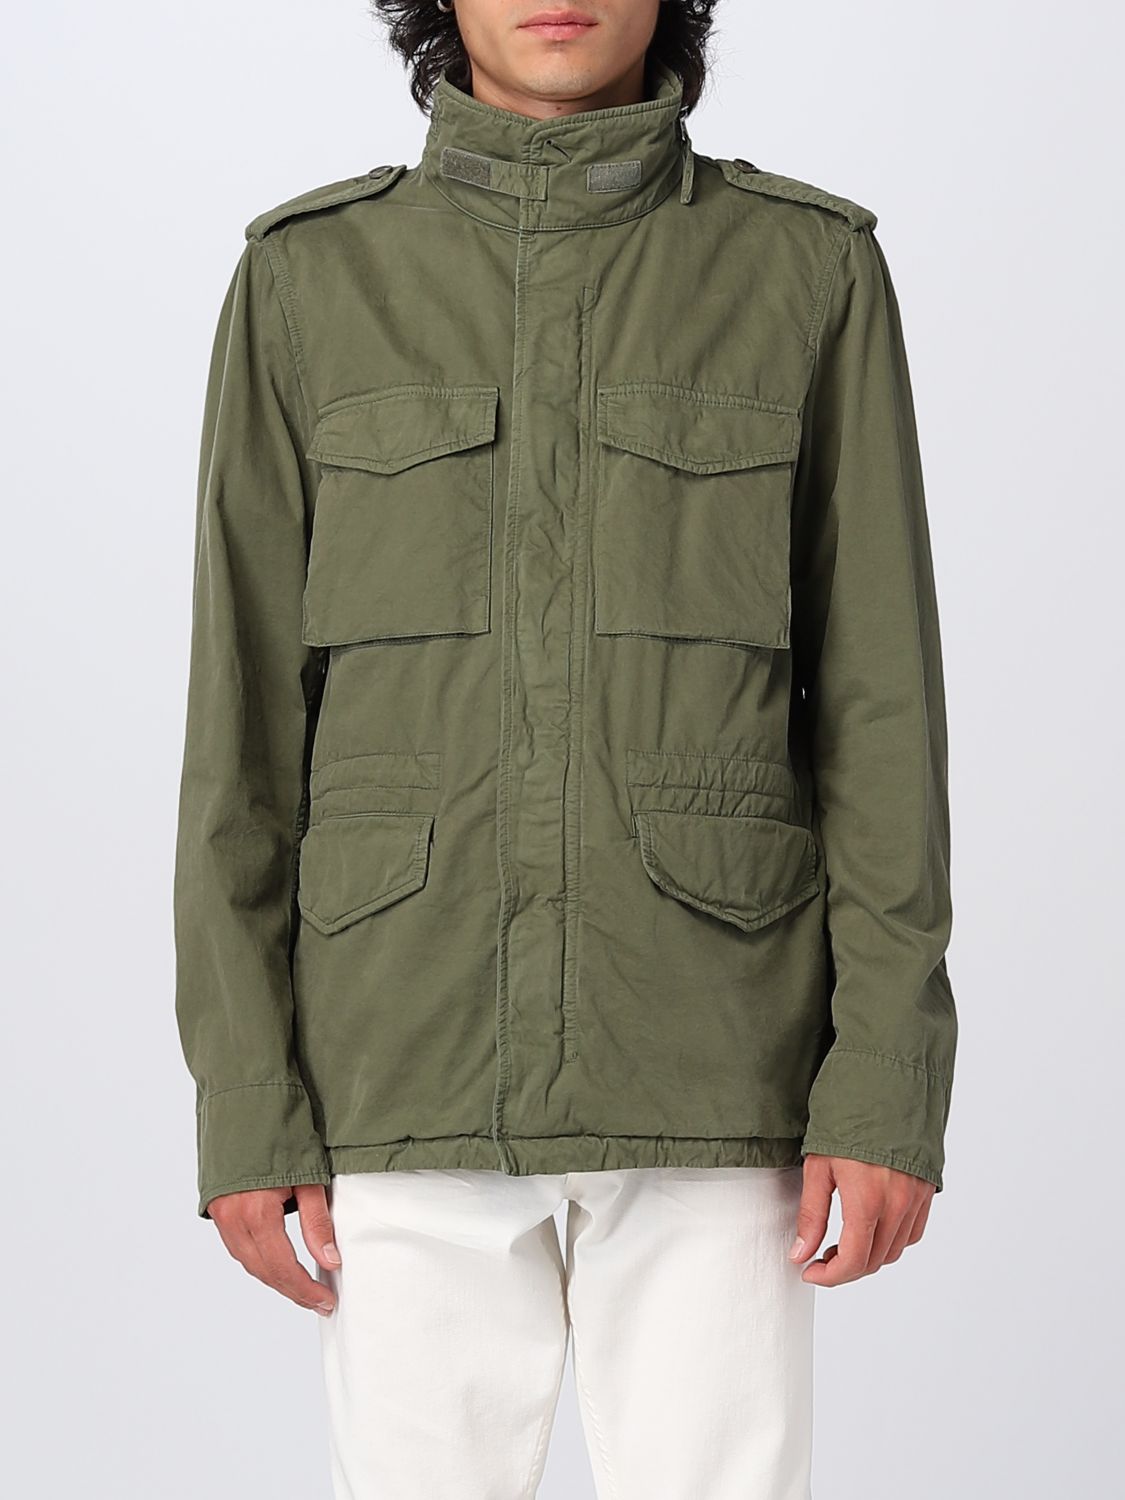 ASPESI: jacket for man - Military | Aspesi jacket CG20A262 online on ...